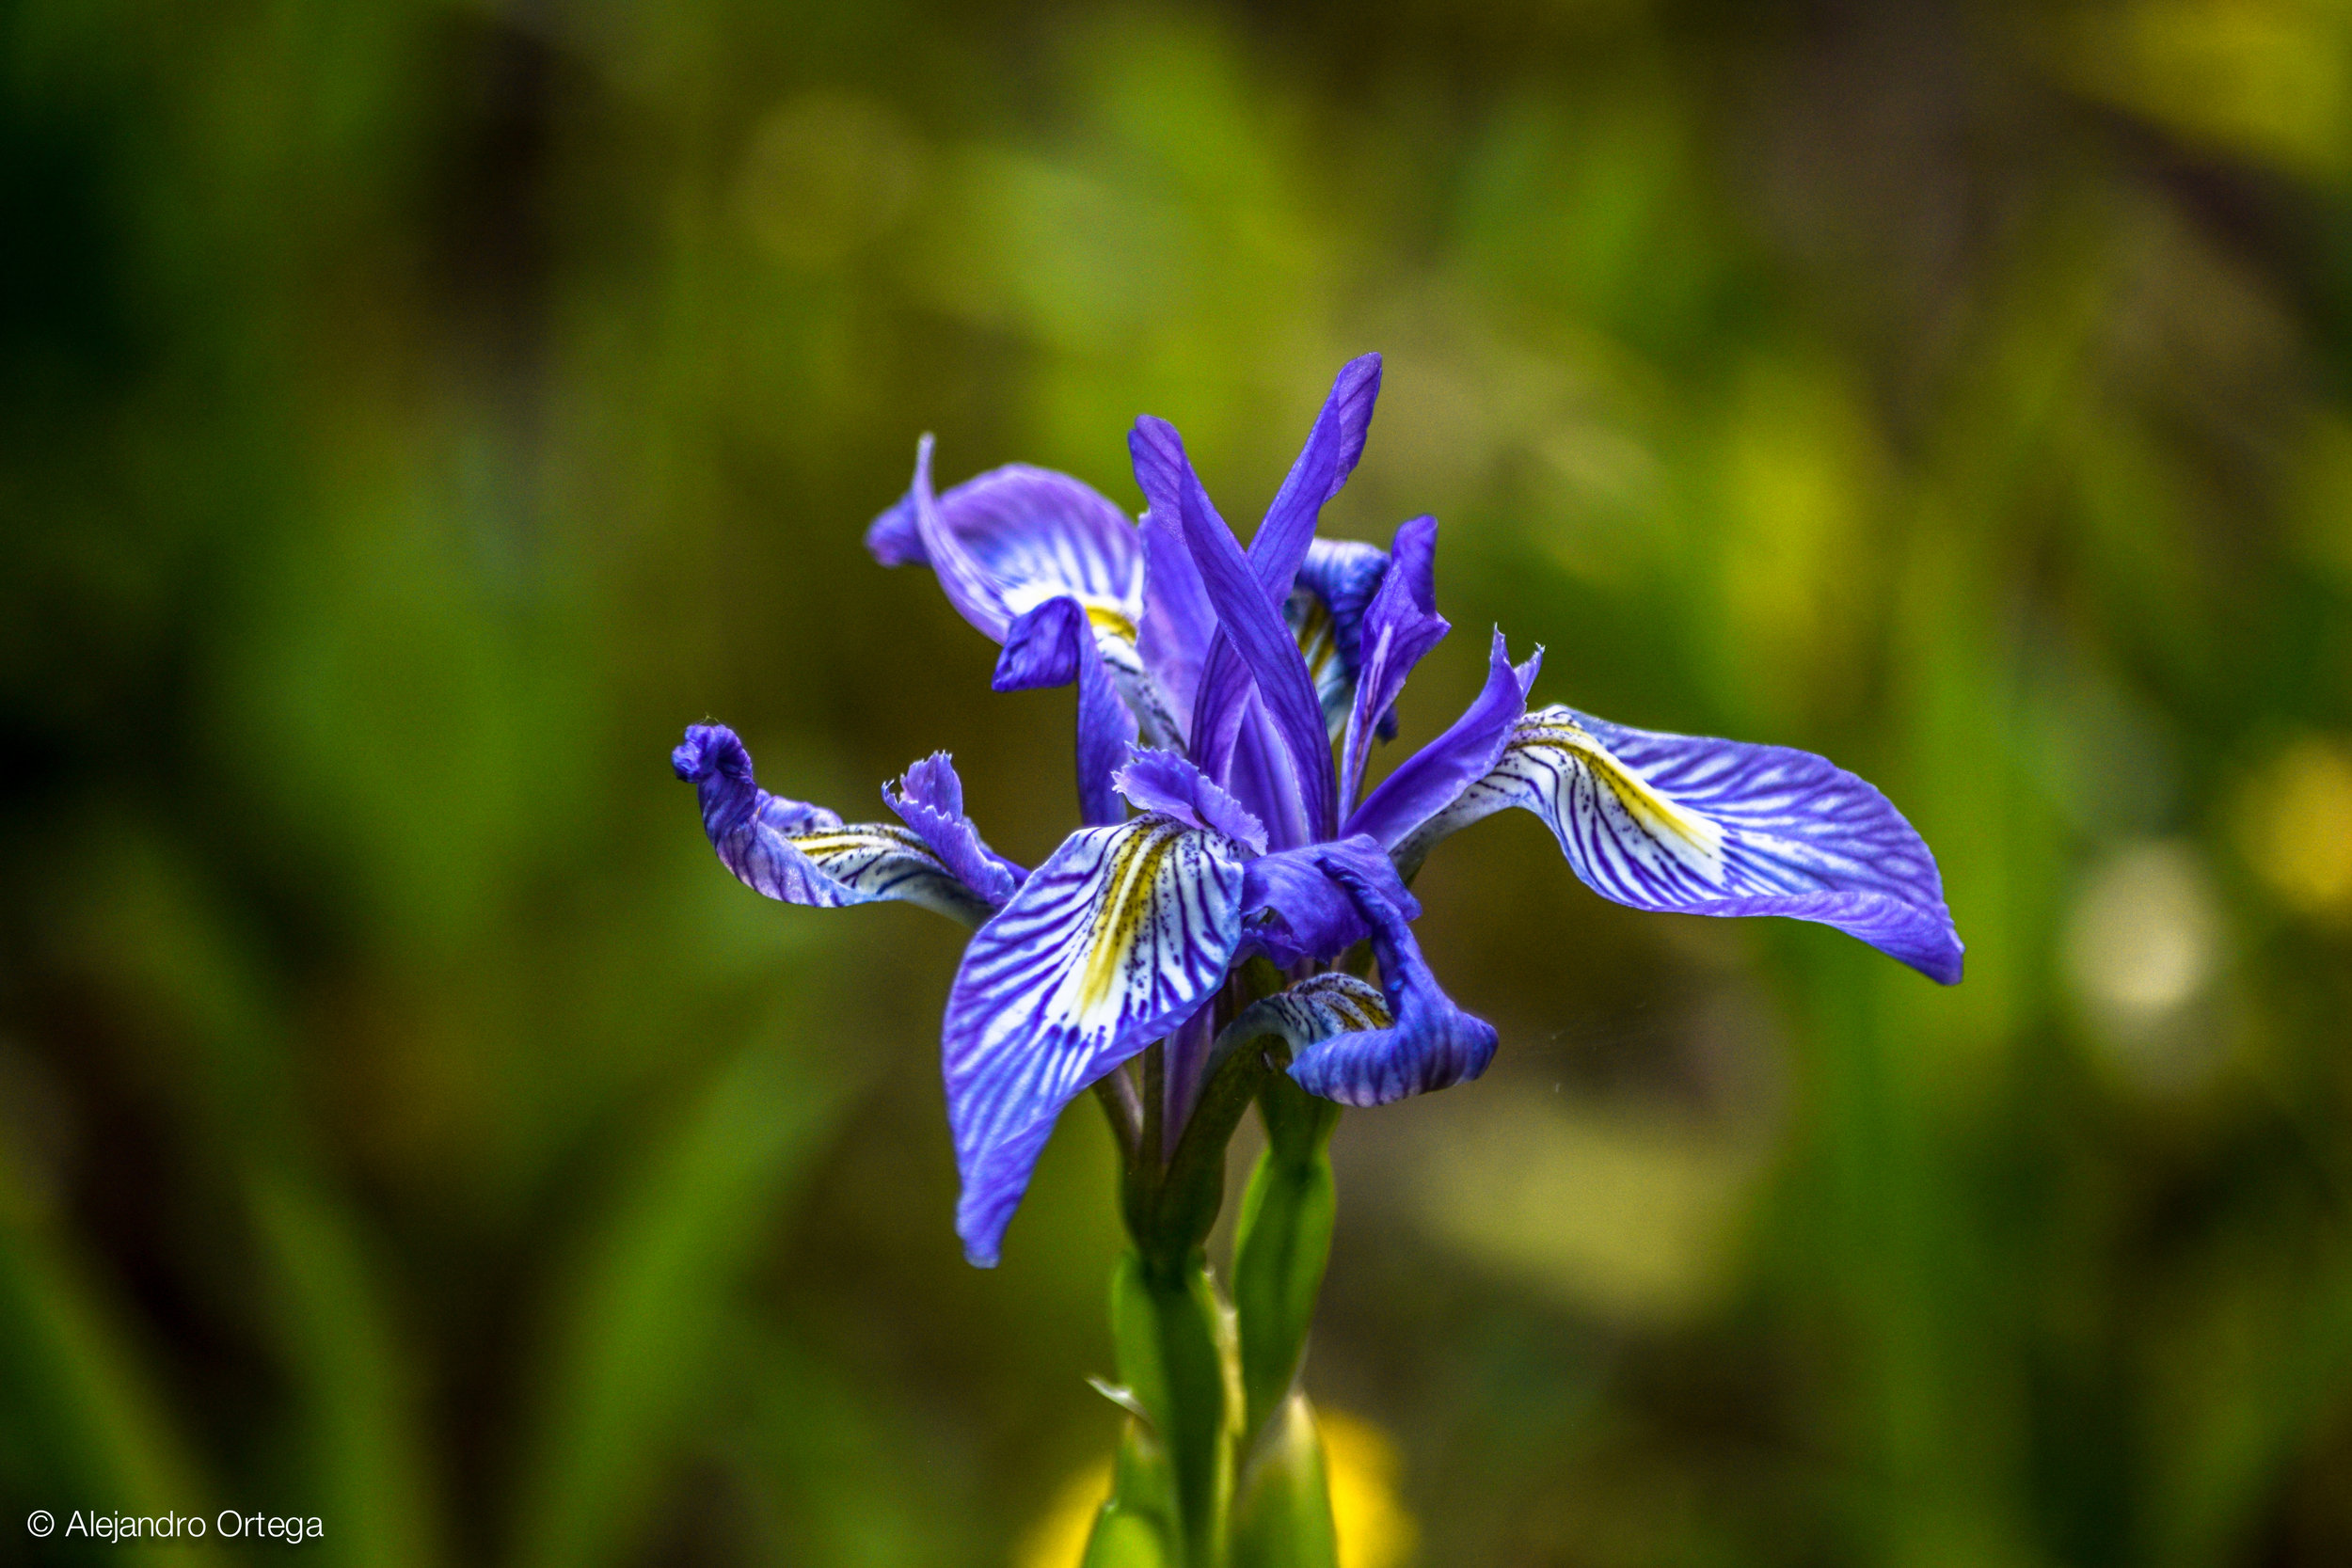 Rocky mountain iris (Iris missouriensis)